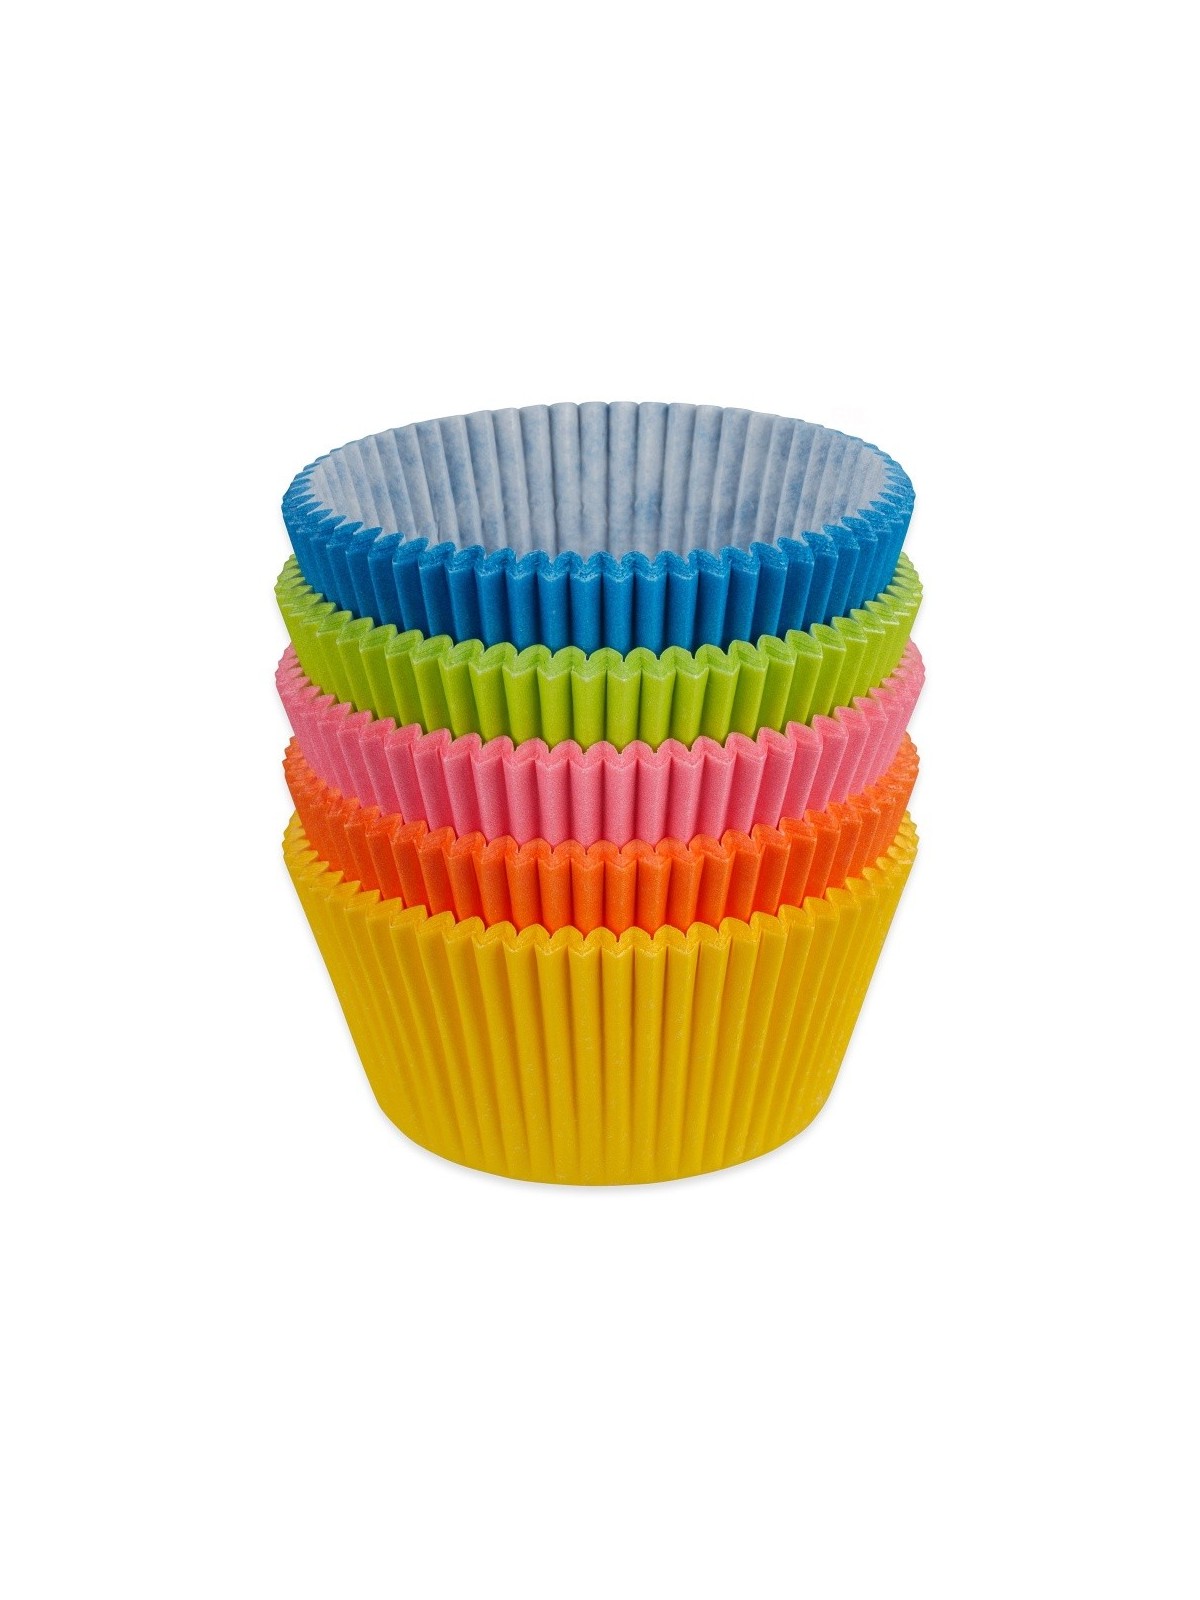 Baking Cups - color mix - 100pcs